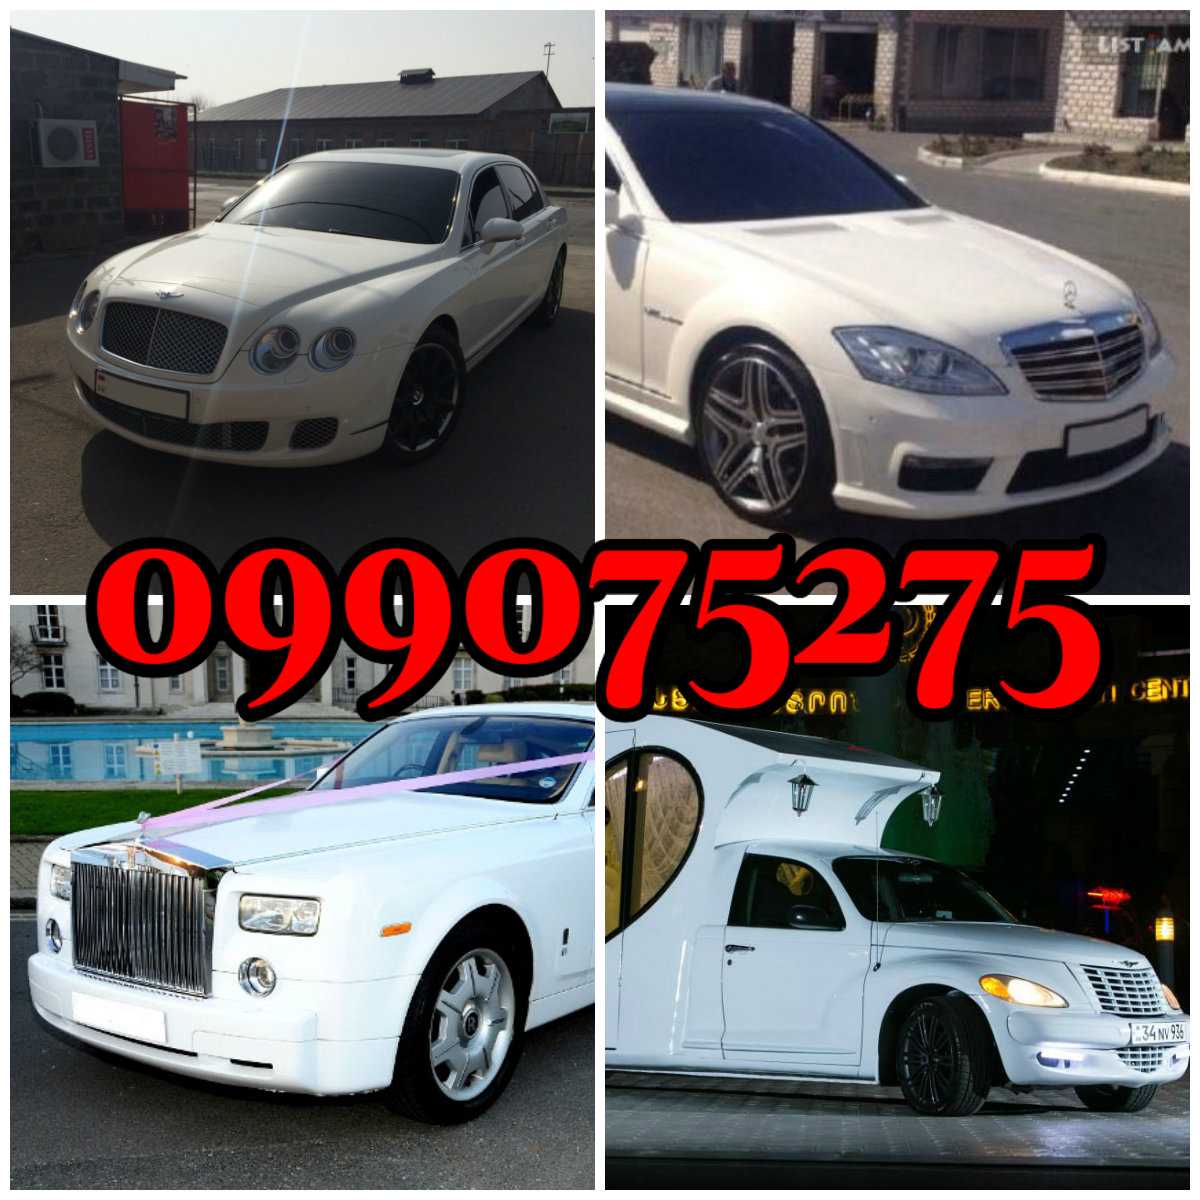 Luxurious cars/ մեքենաների վարձույթ Հայաստանում/ Прокат